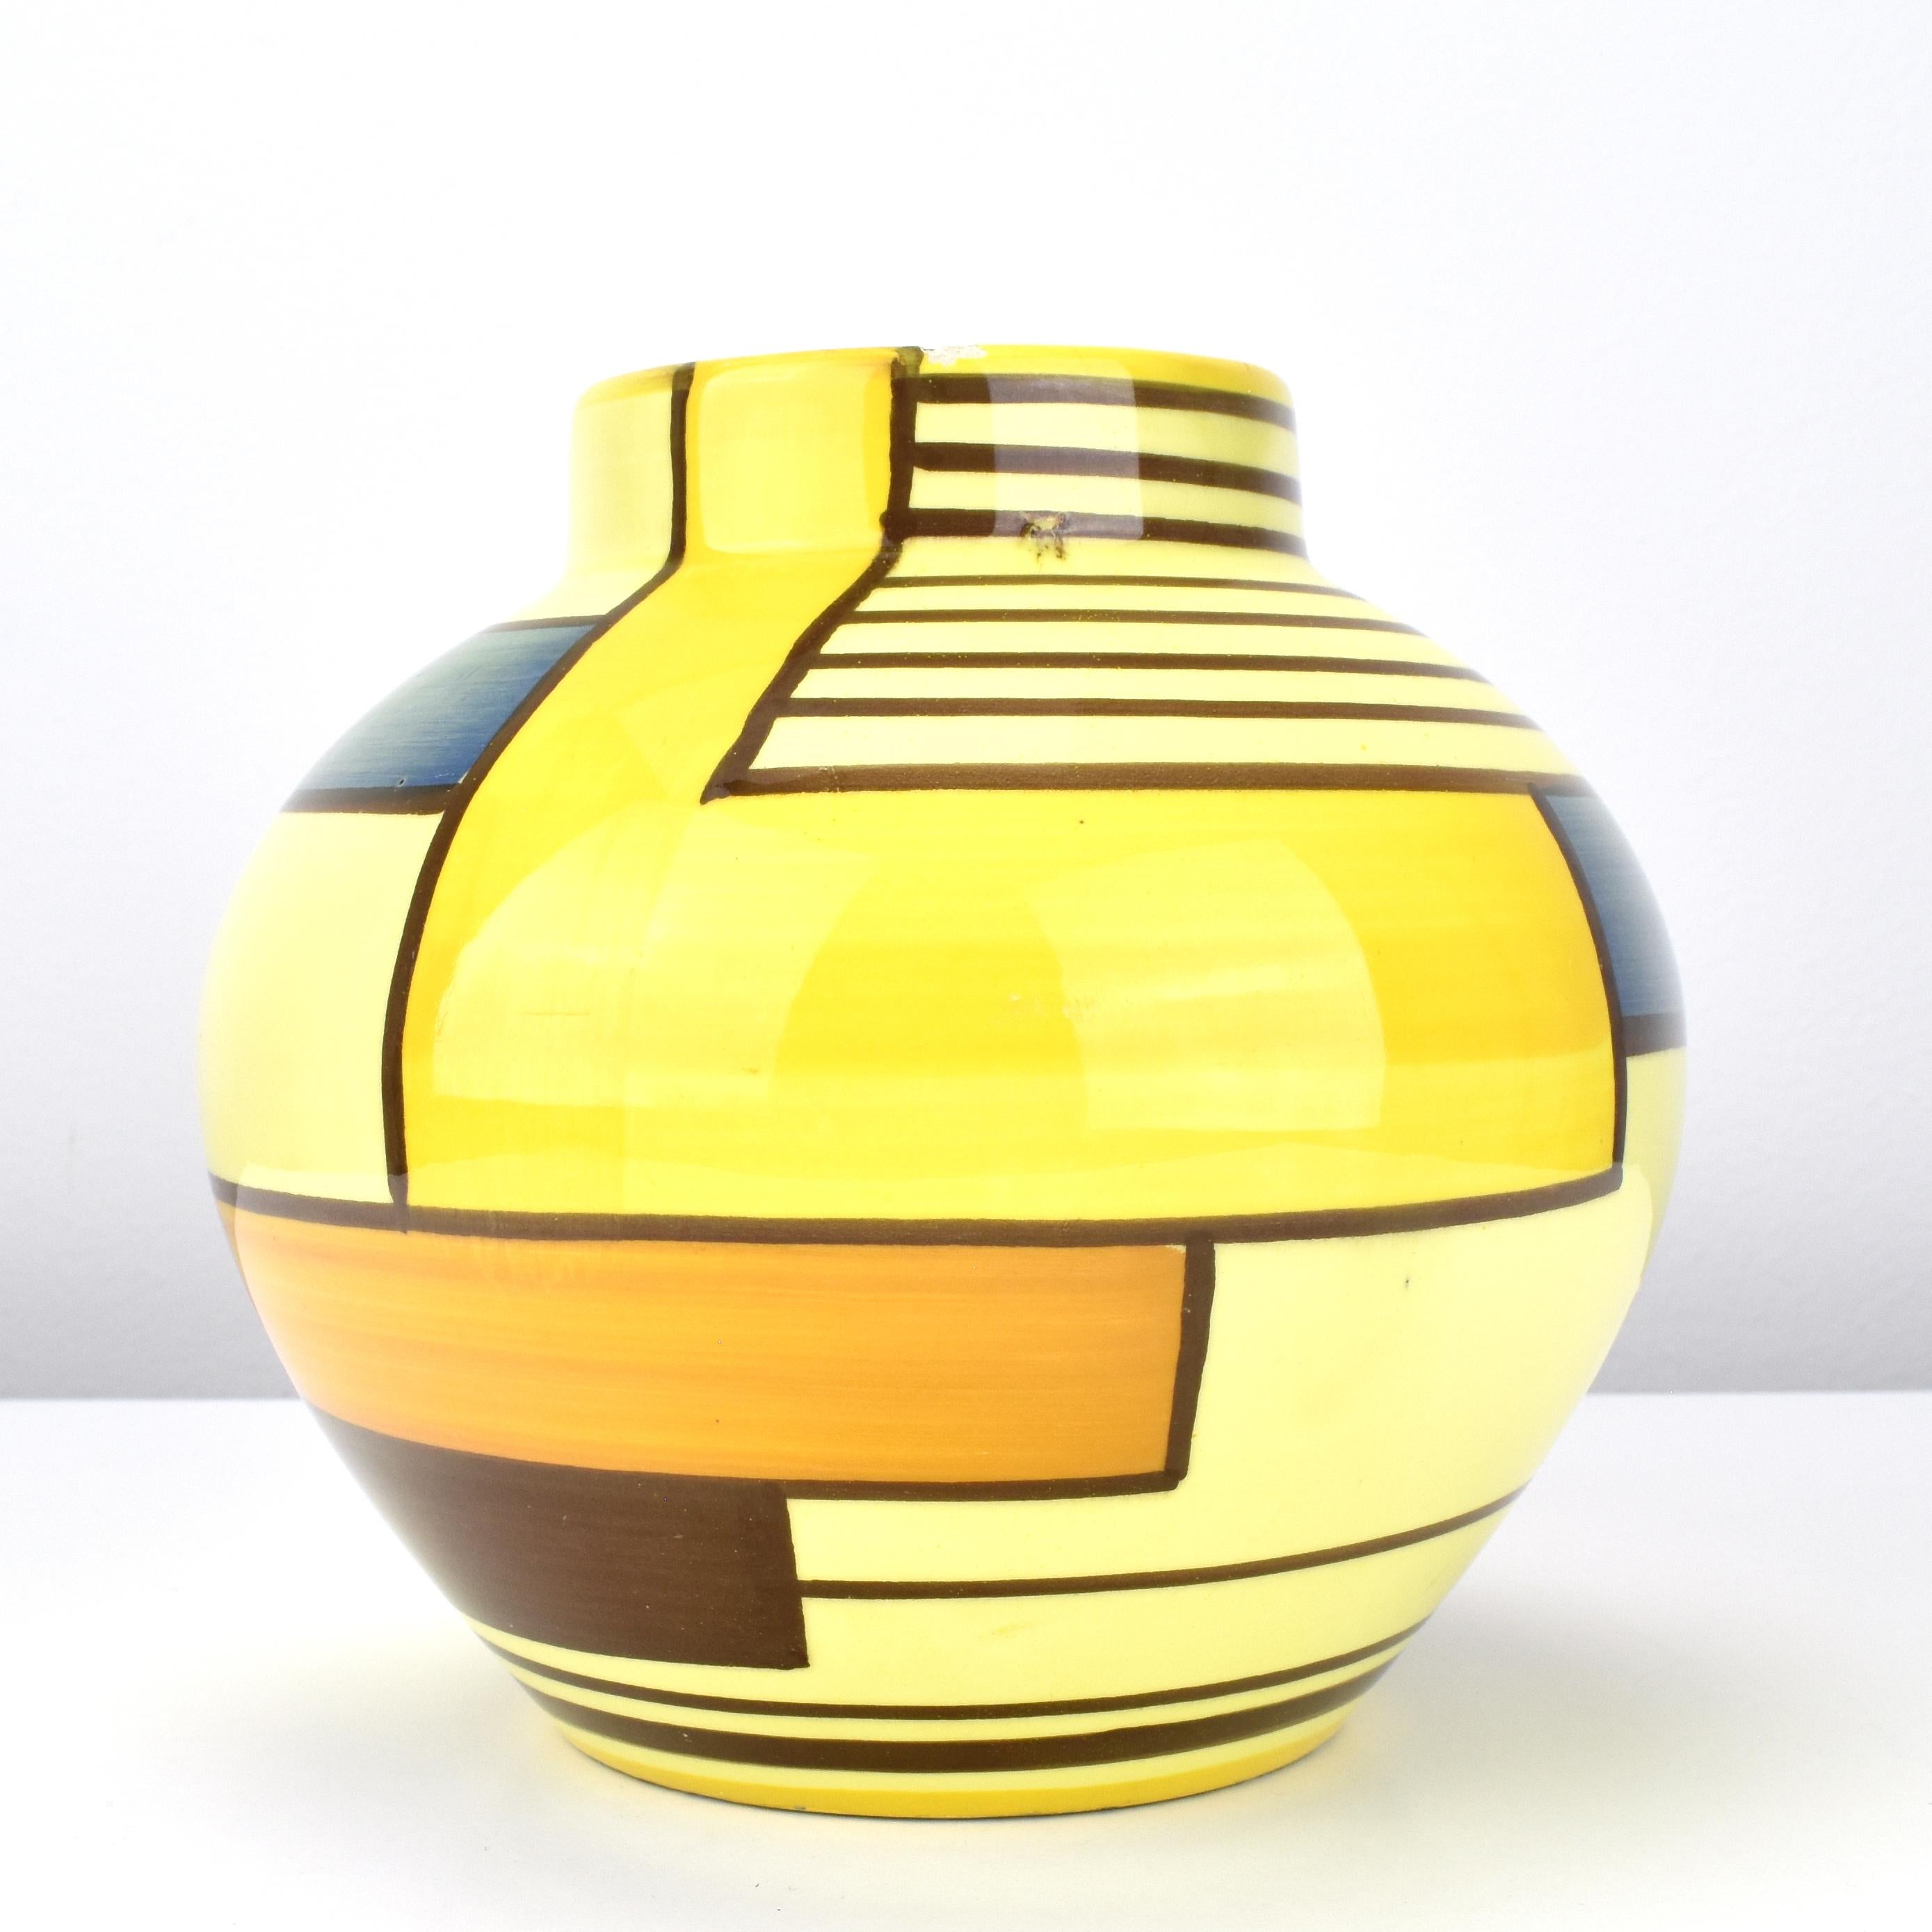 German Schramberg Eva Zeisel Mondrian Majolica Ceramic Vase Art Deco Bauhaus Era For Sale